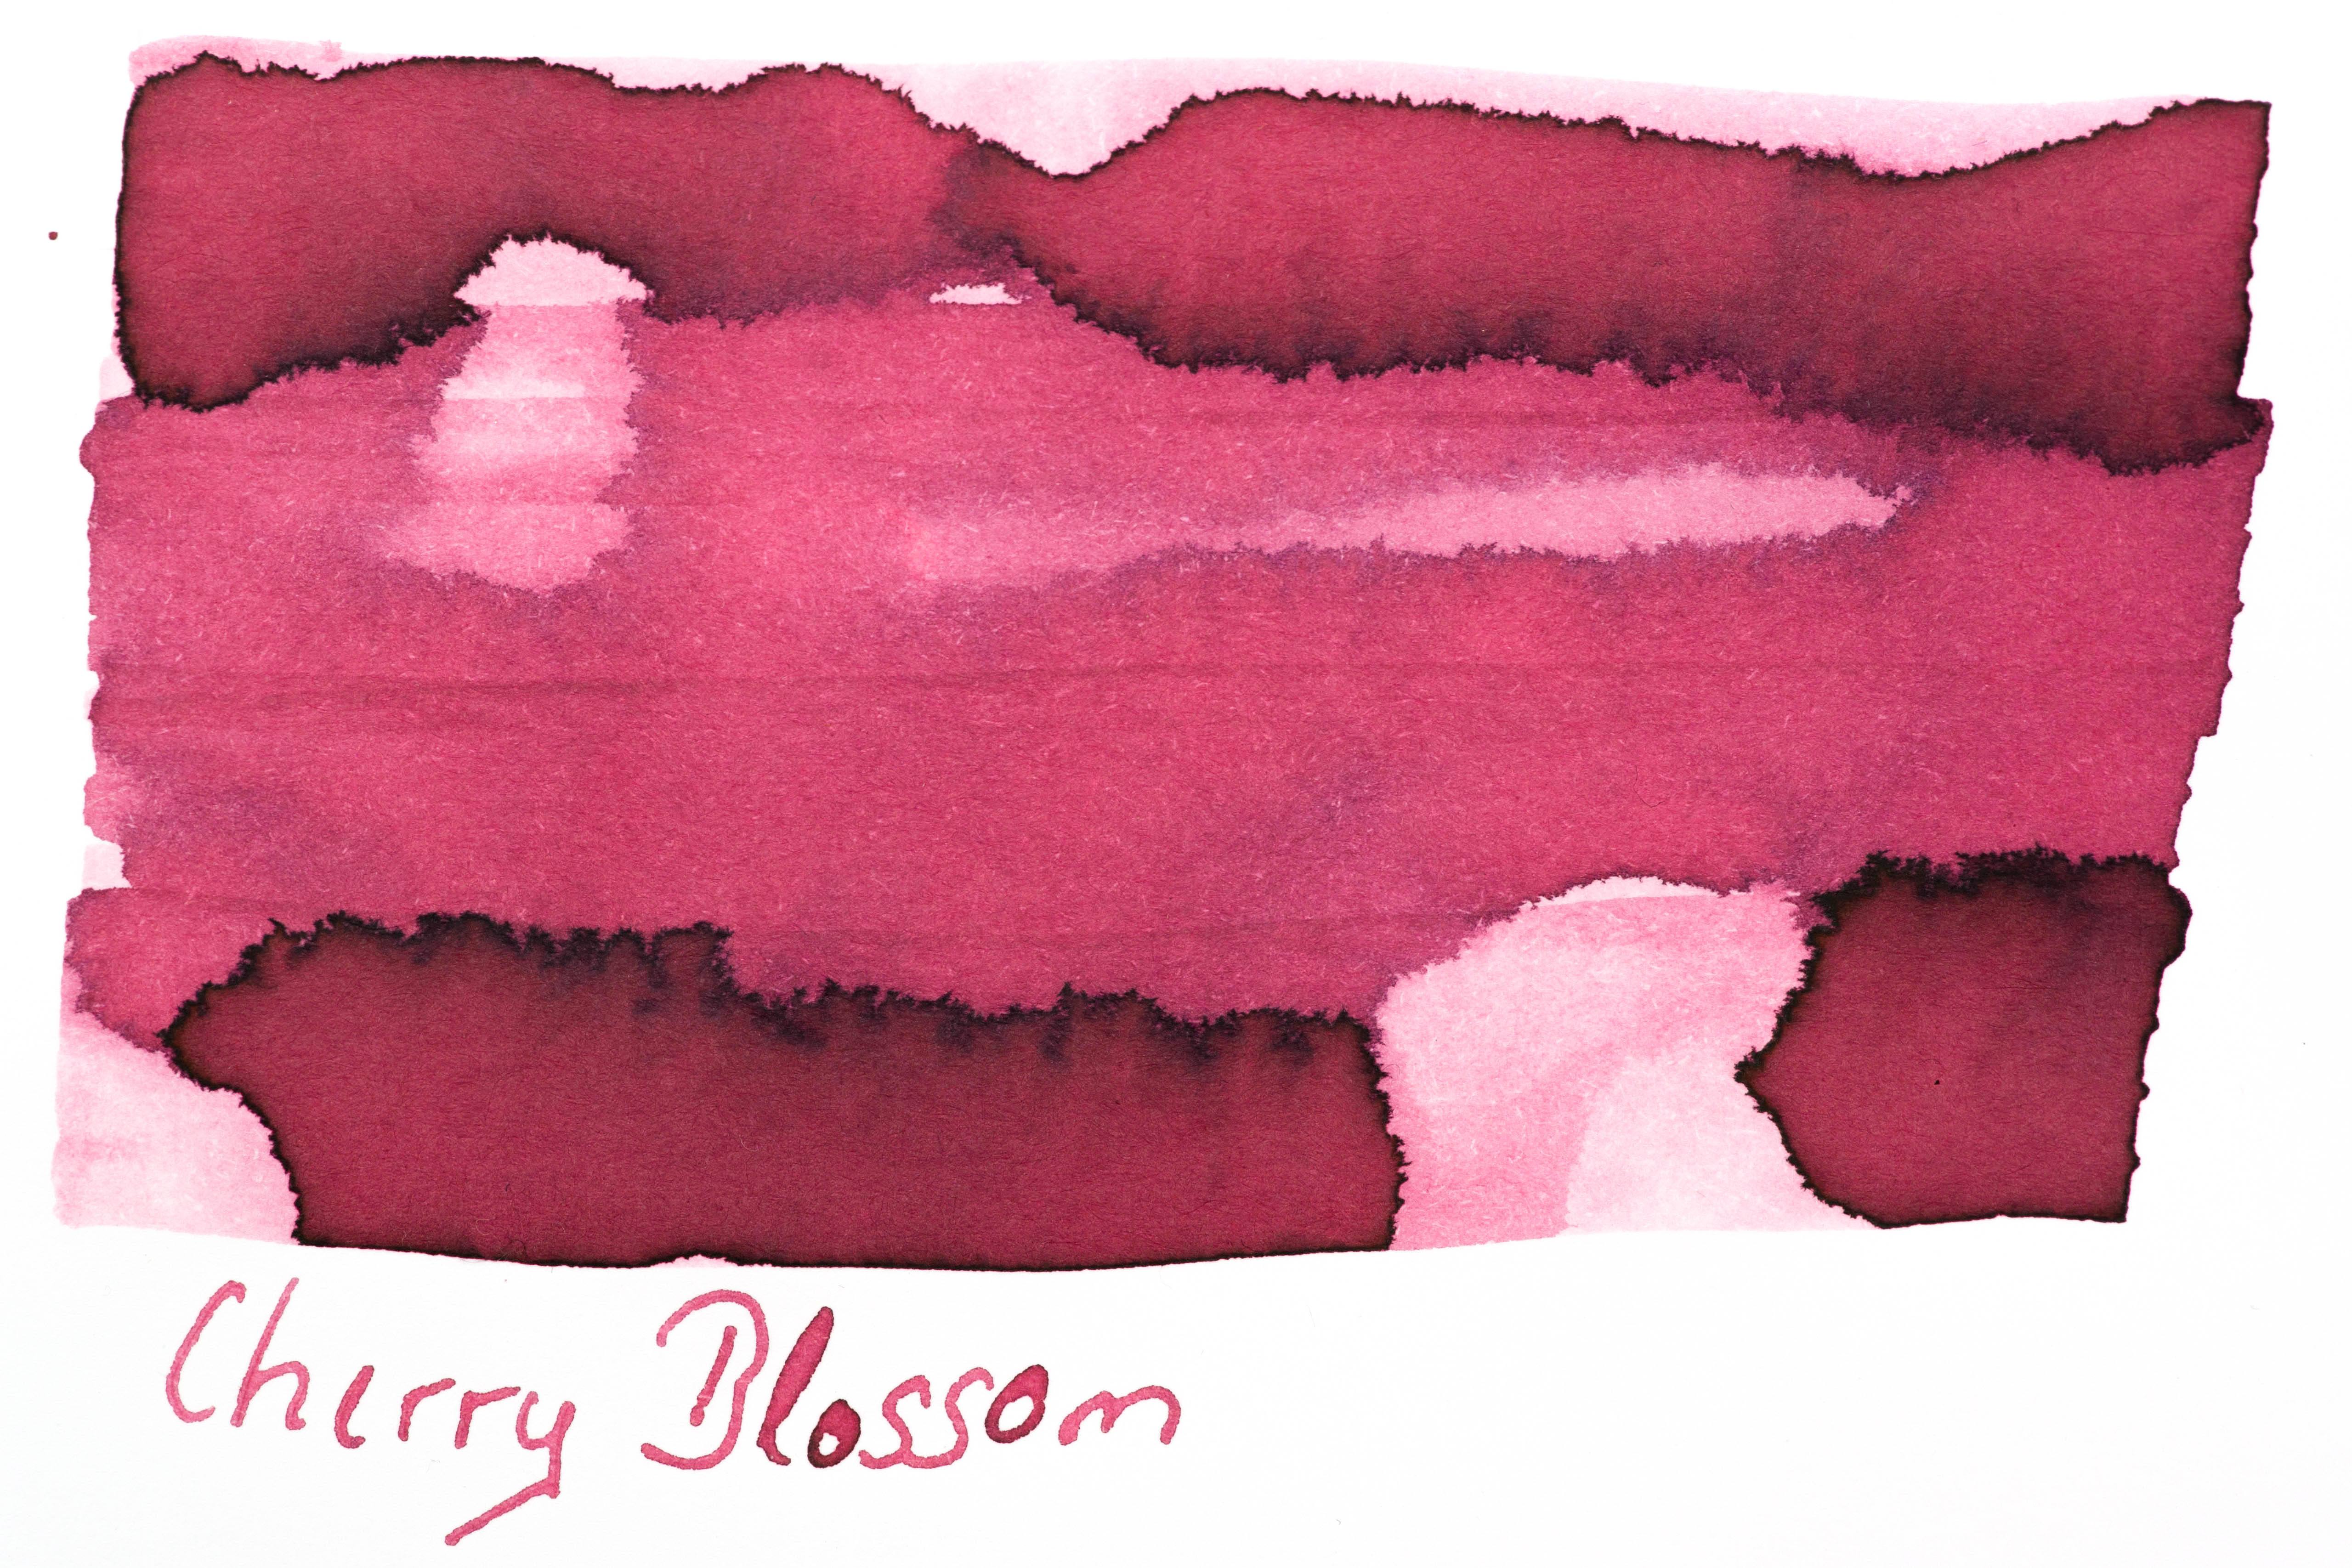 Robert Oster Signature Ink - Cherry Blossom